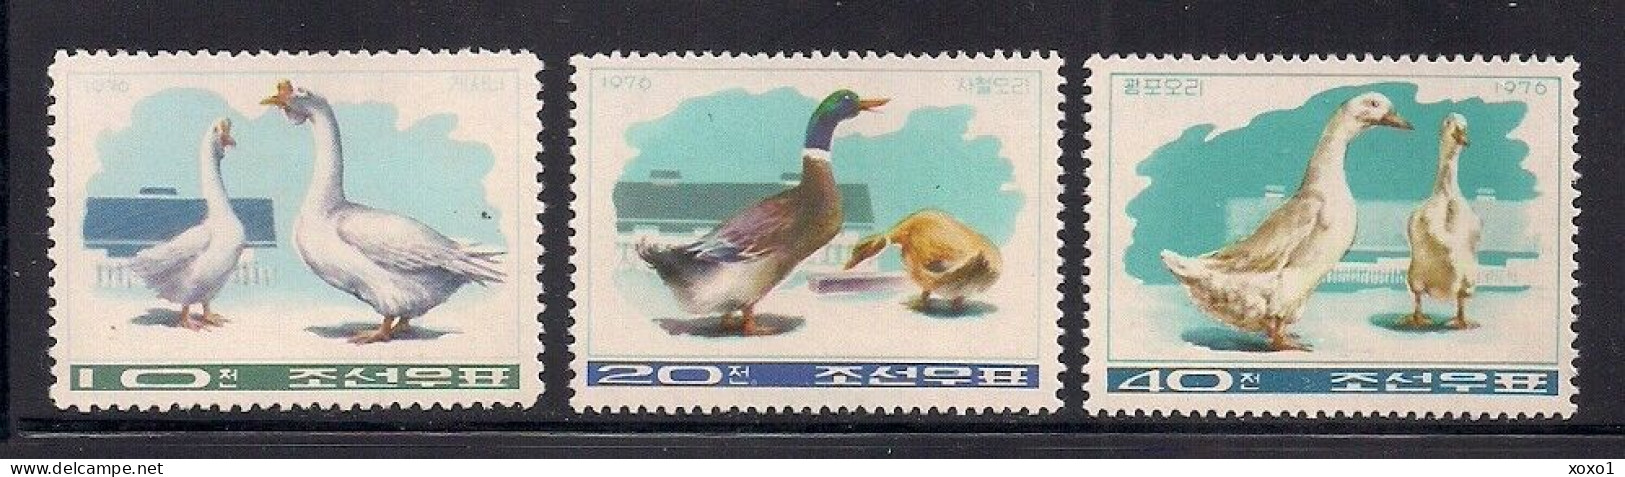 Korea, North 1976 MiNr. 1467 - 1469 Korea-Nord  Vögel Birds Farm  3v  MNH ** 7.00 € - Geese